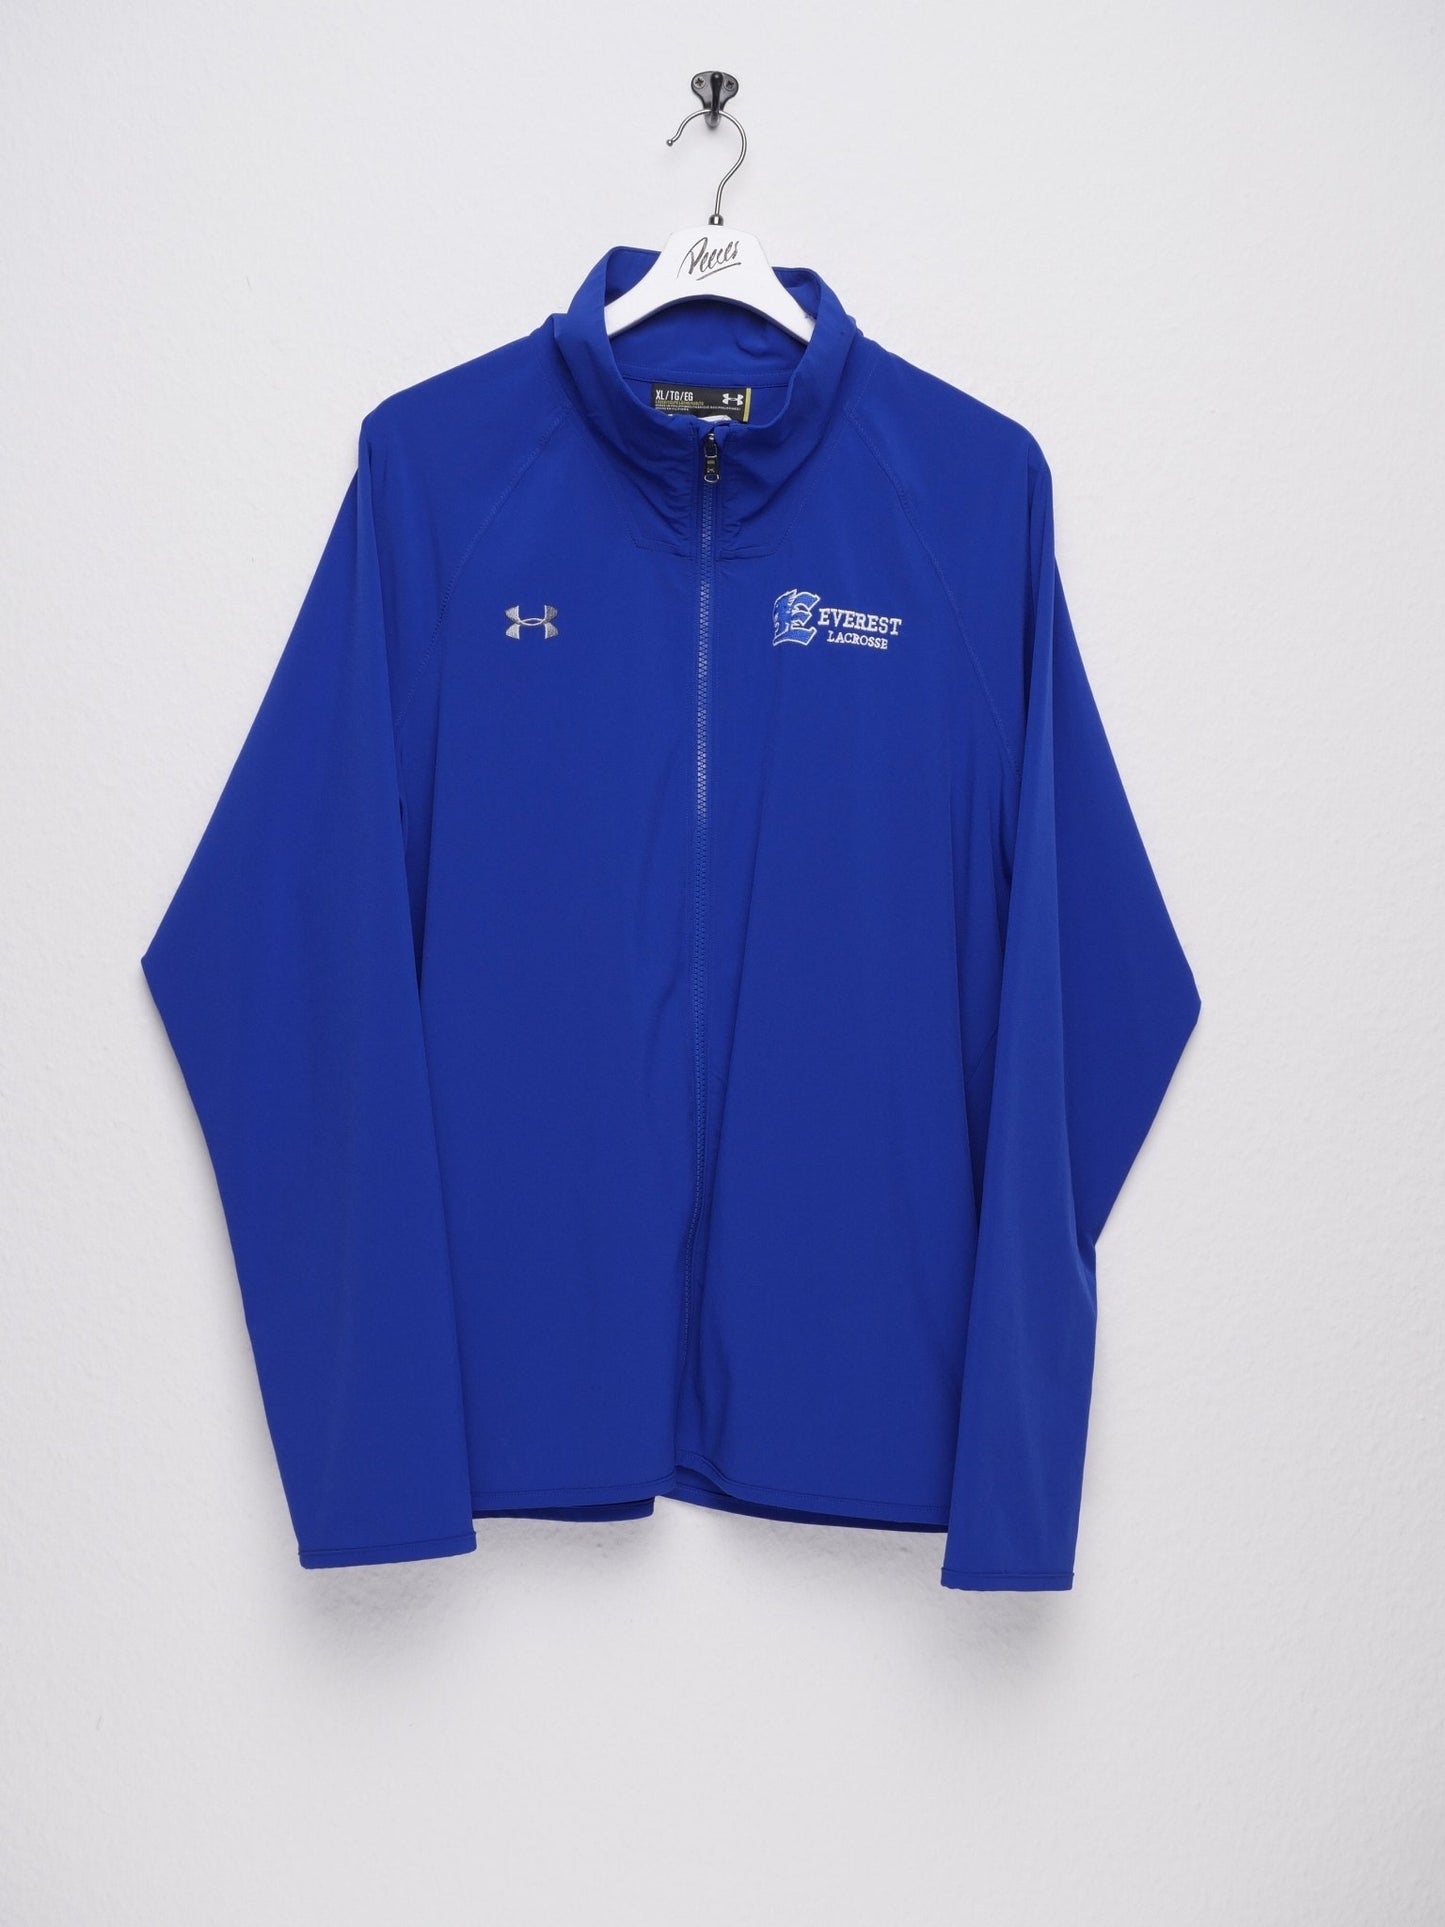 under amour Everest Lacrosse embroidered Logo blue Track Jacket - Peeces